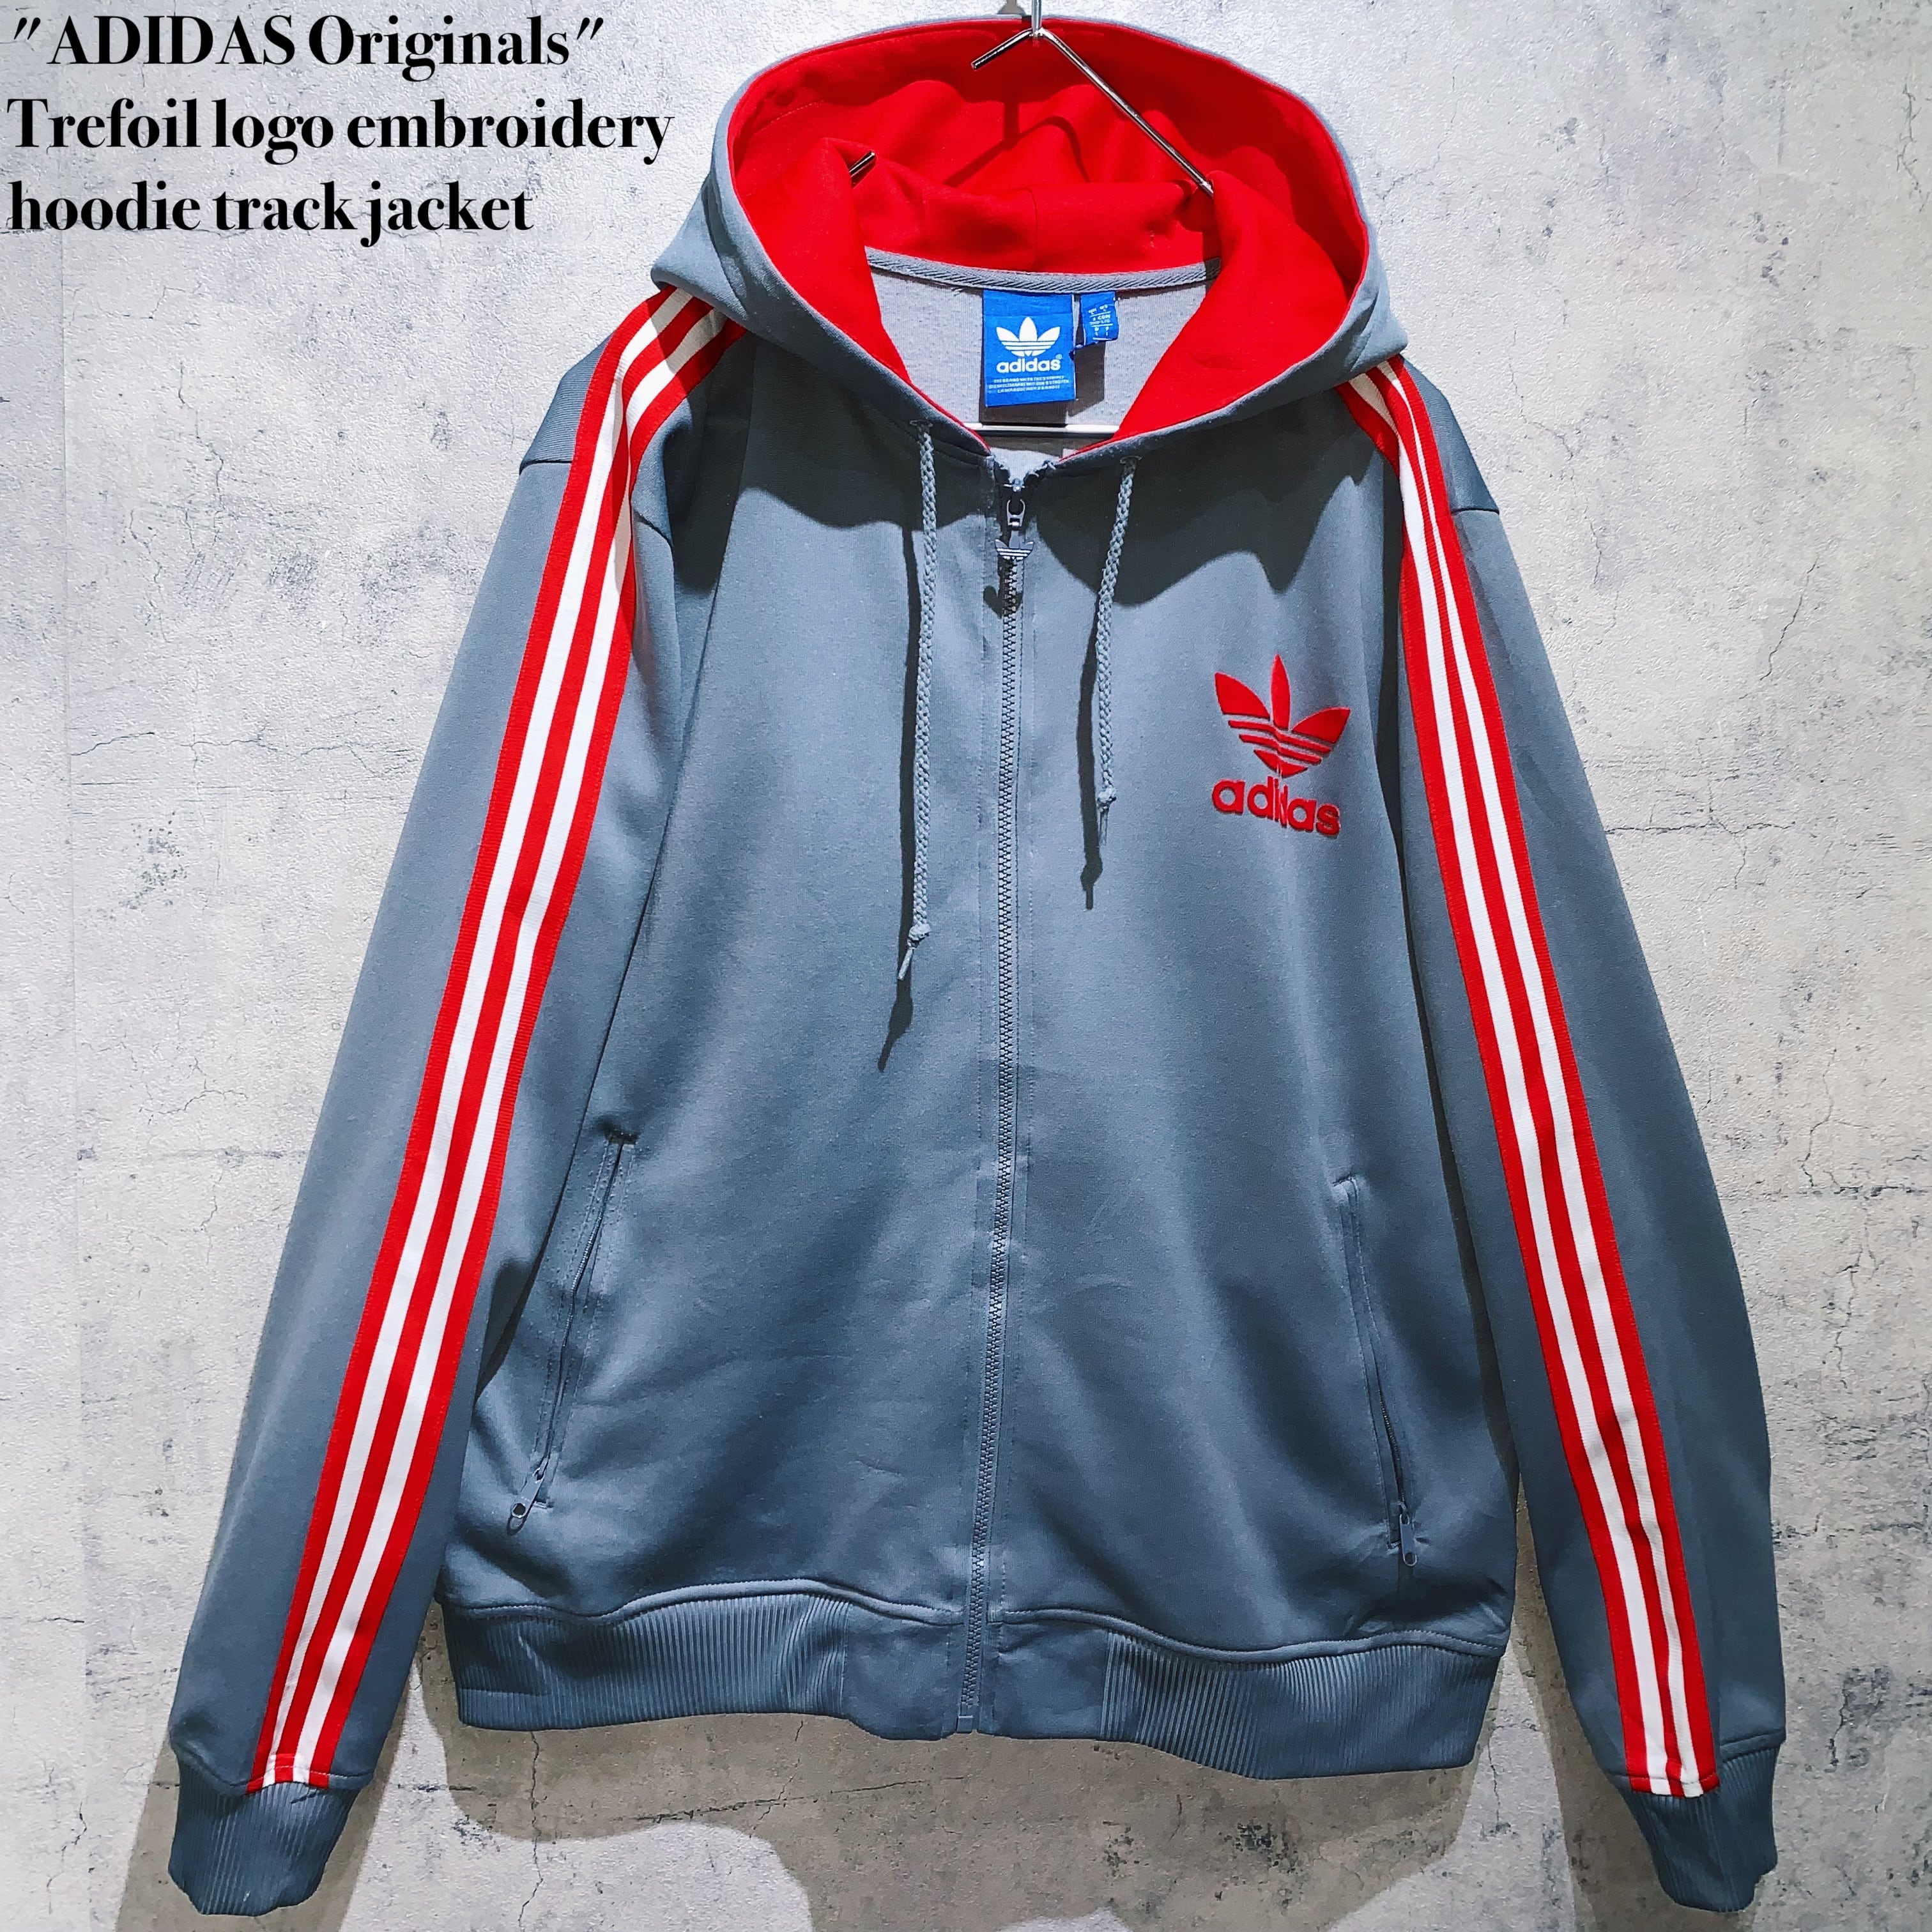 ADIDAS Originals"Trefoil logo embroidery hoodie track jacket | ayne